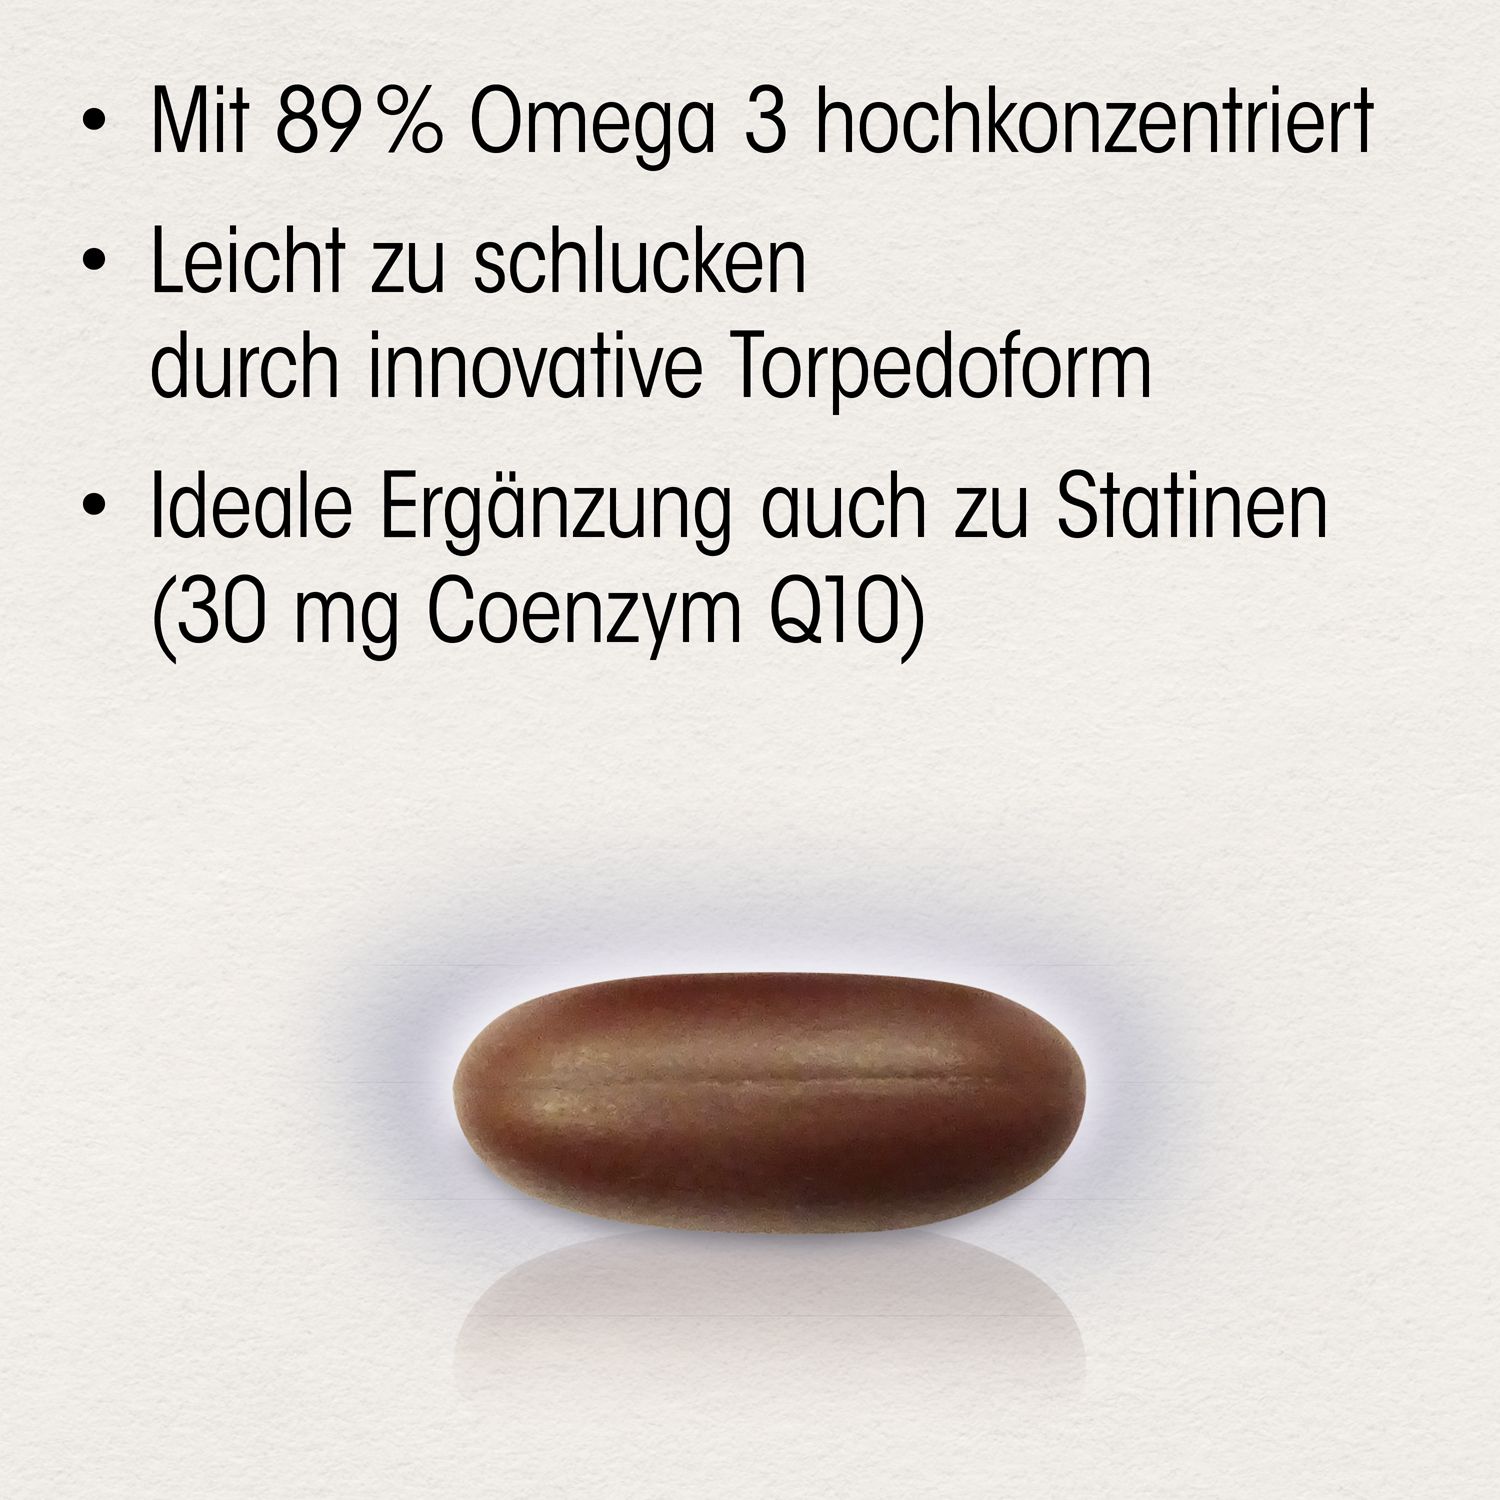 Dr. Böhm® Omega 3 complex Kapseln